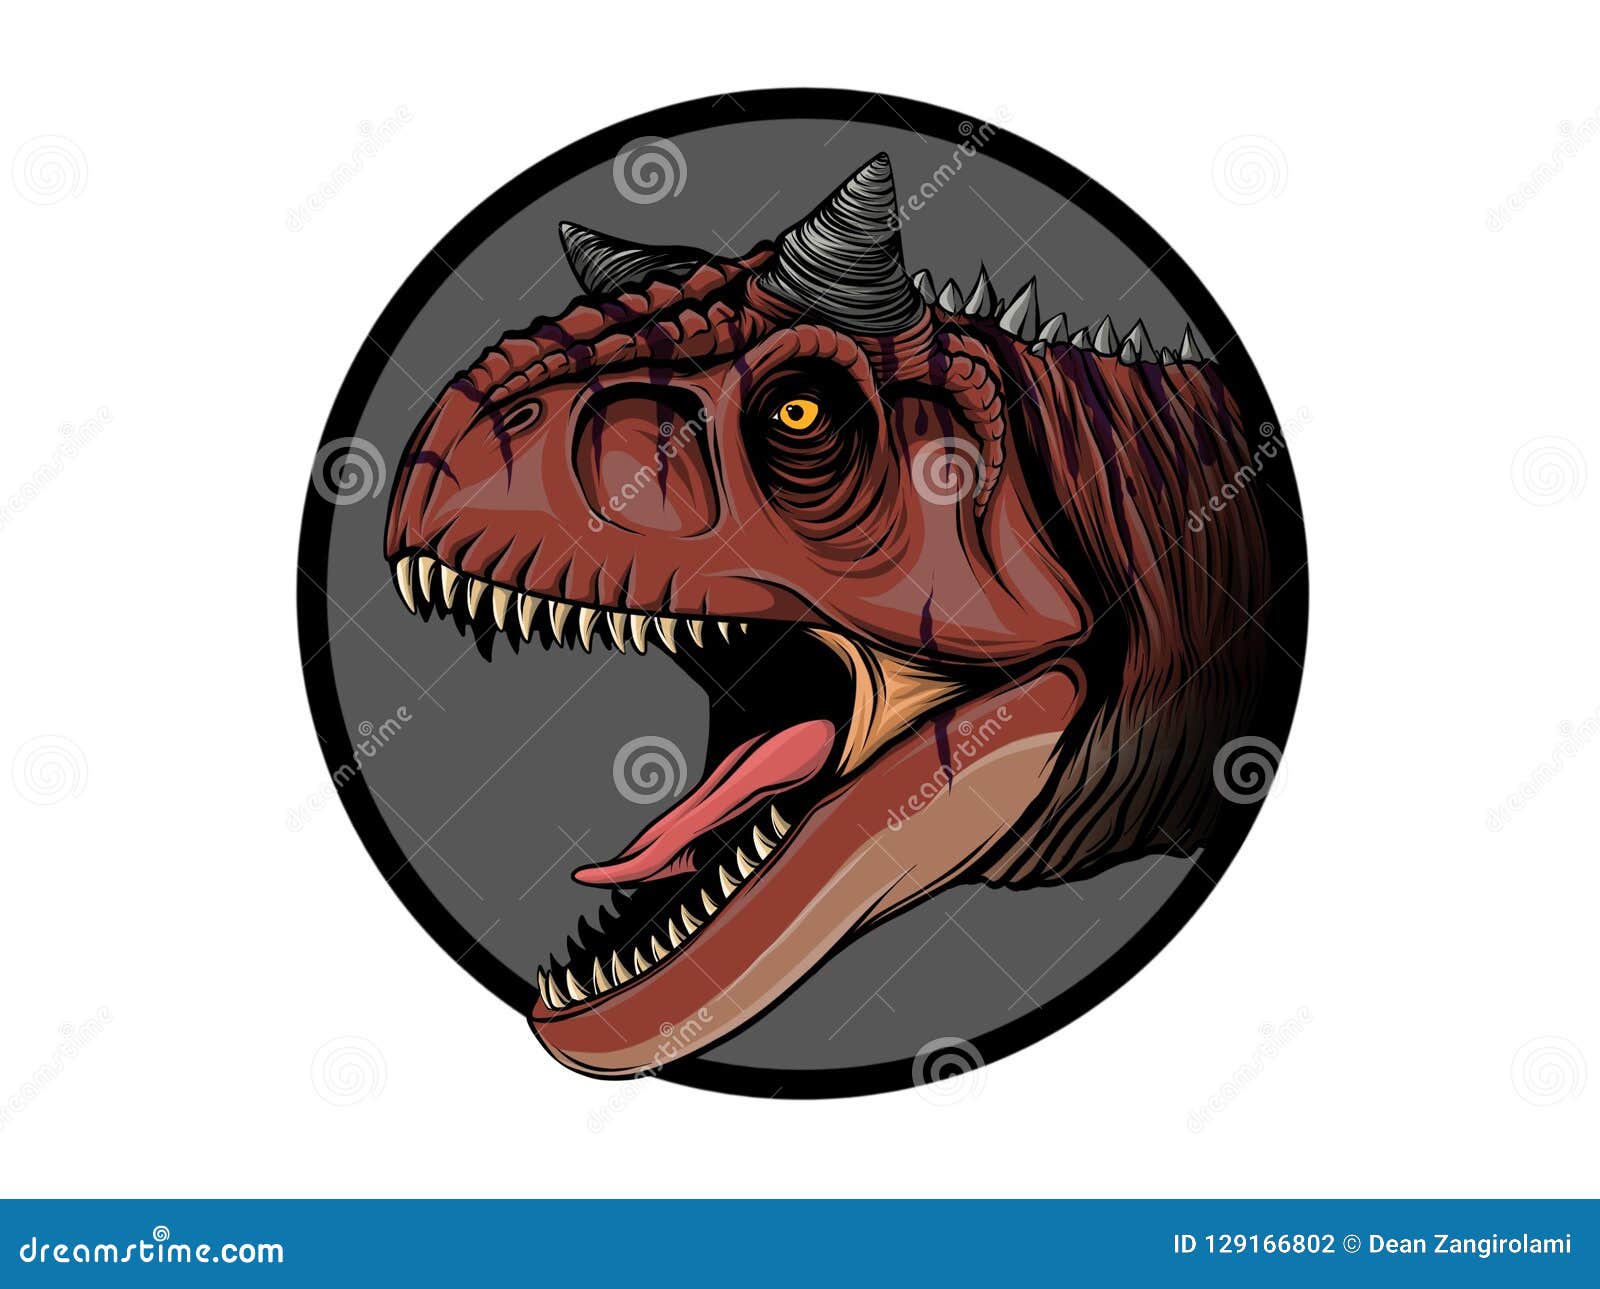 Draw Cartoon Dinosaur Carnotaurus Illustration For Children Stock Illustration Illustration Of Dino Artwork 129166802